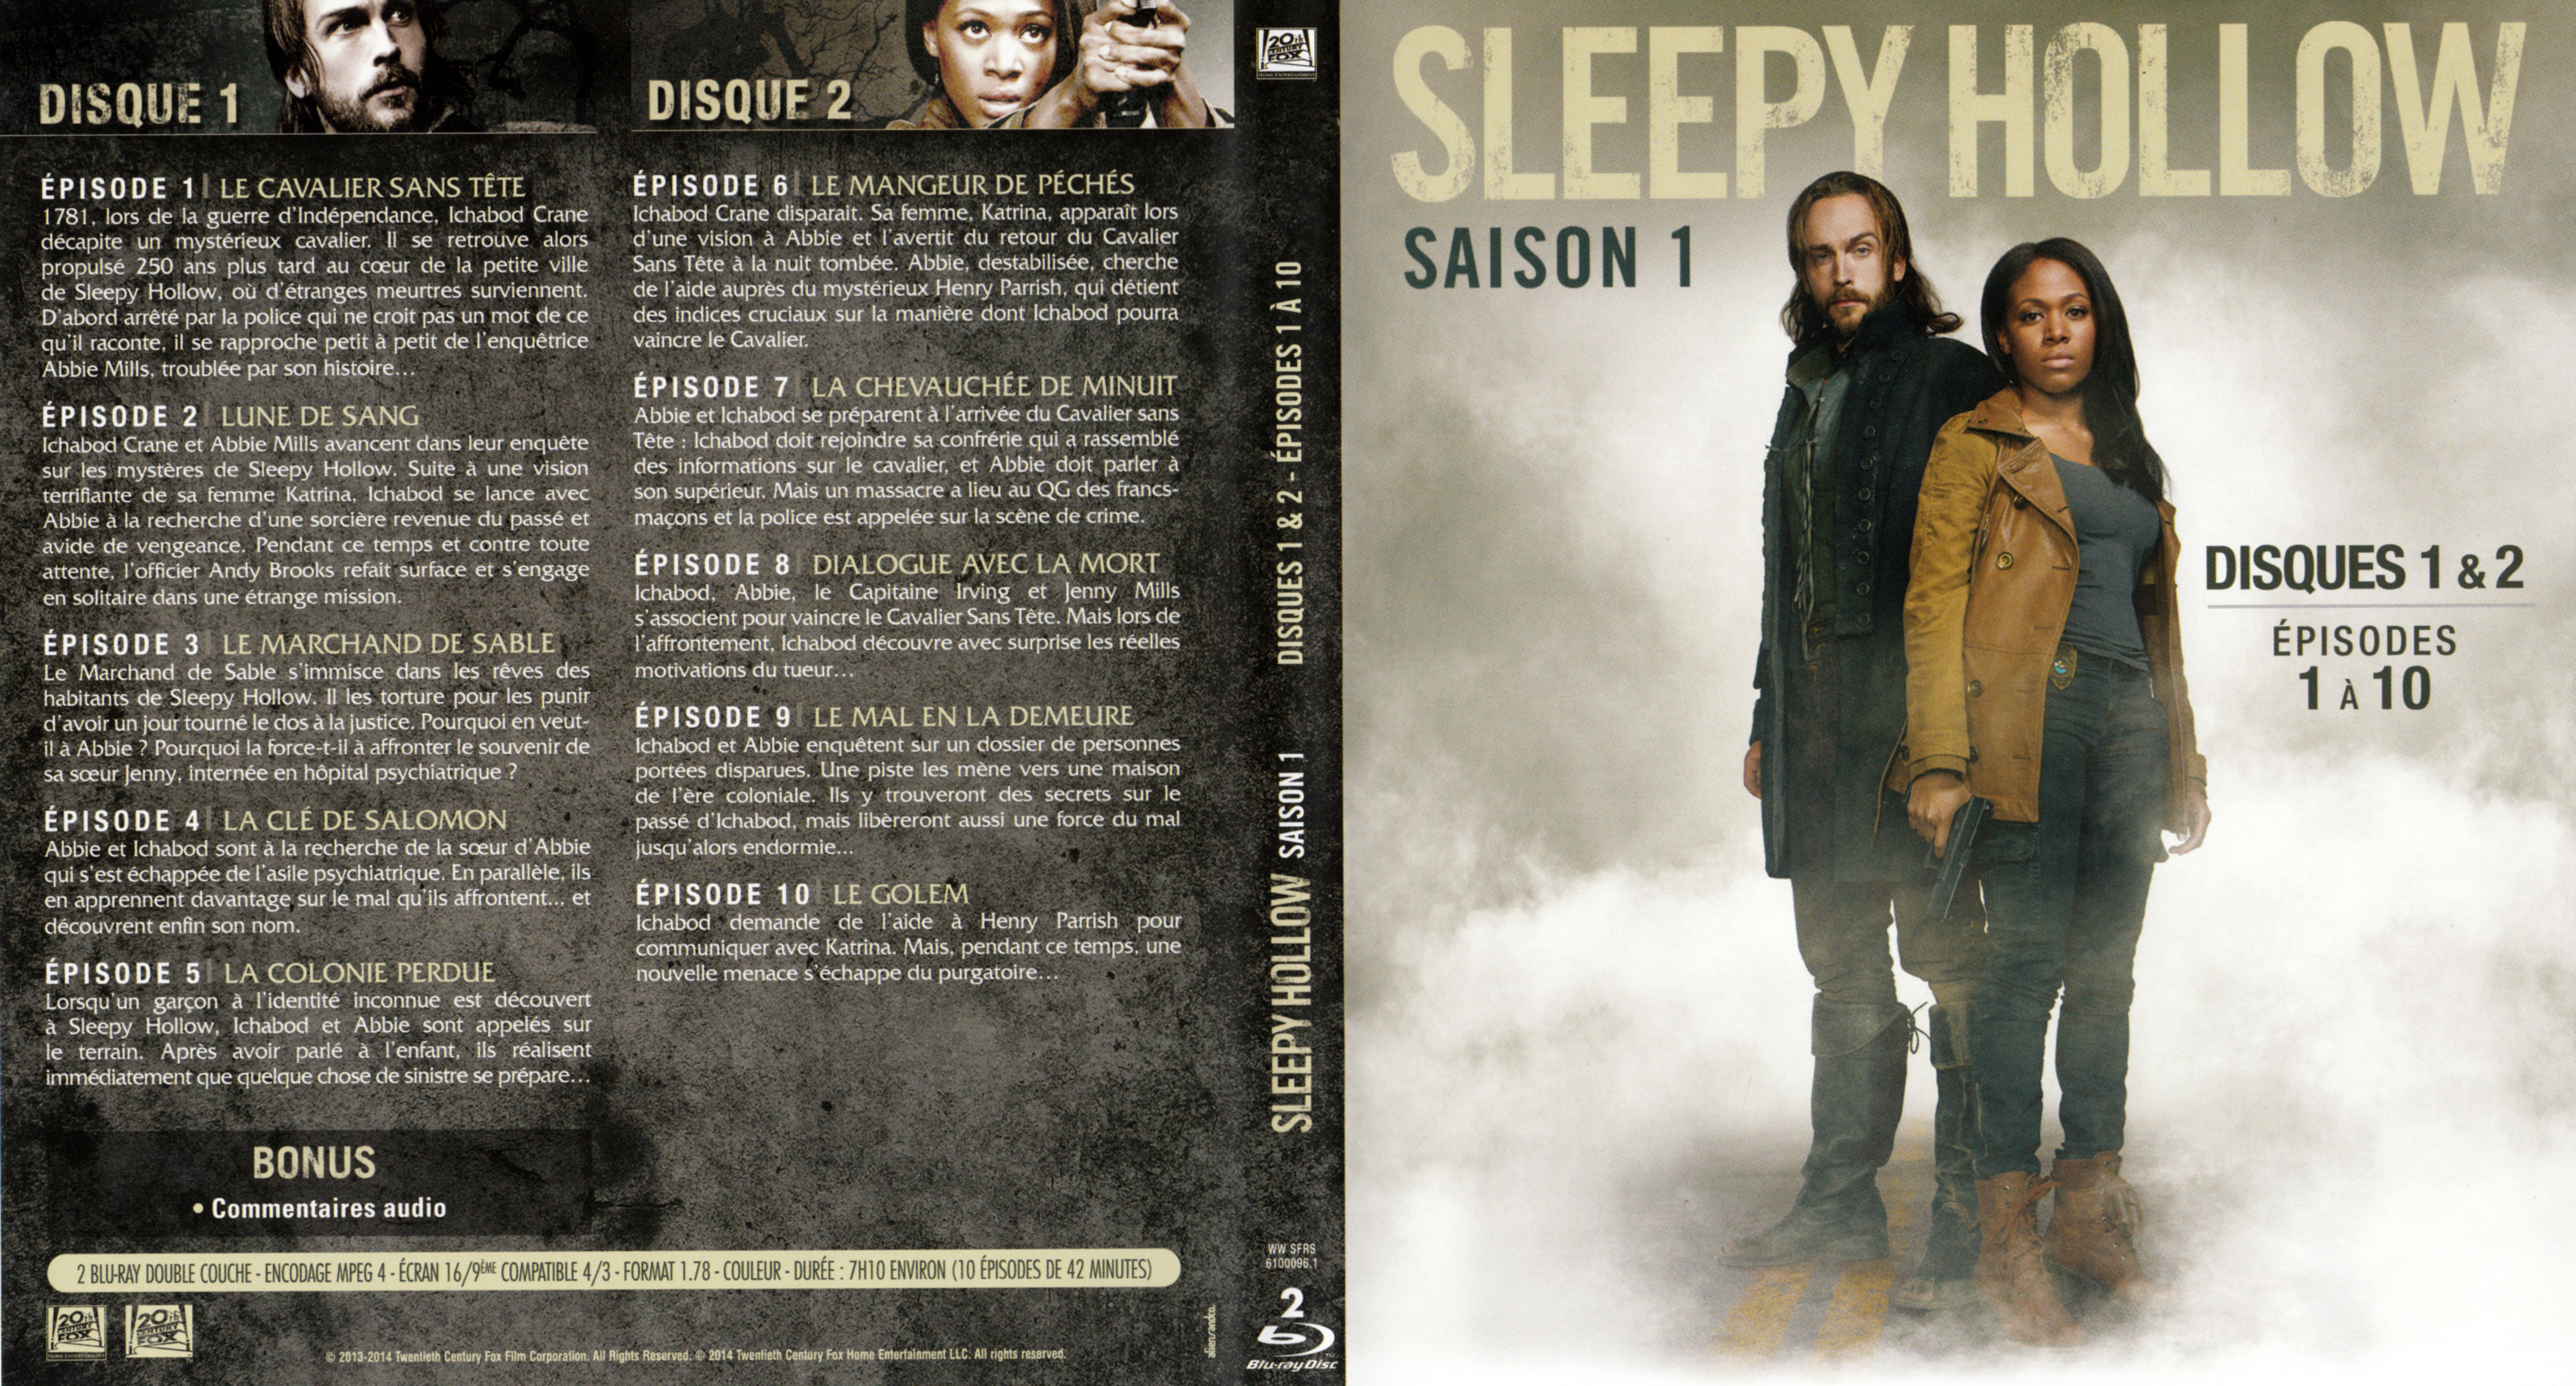 Jaquette DVD Sleepy hollow Saison 1 DISC 1-2 (BLU-RAY)